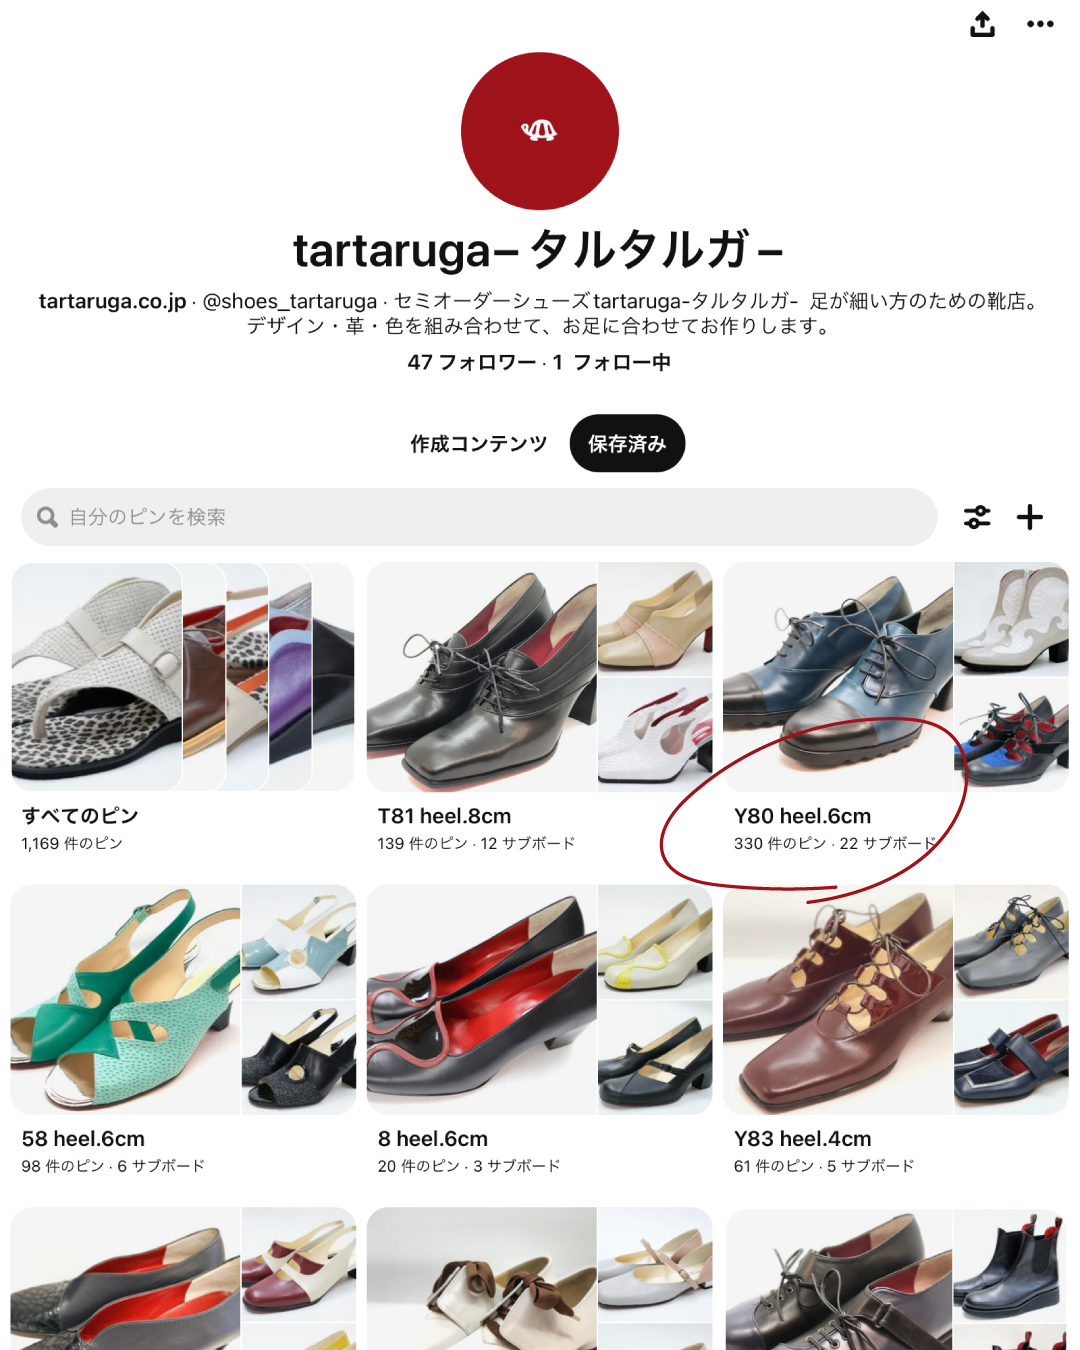 tartaruga の Instagram & Pinterest (part.2) - タルタルガ・tartaruga｜大阪・淀屋橋の オーダーメイドシューズの製作・販売